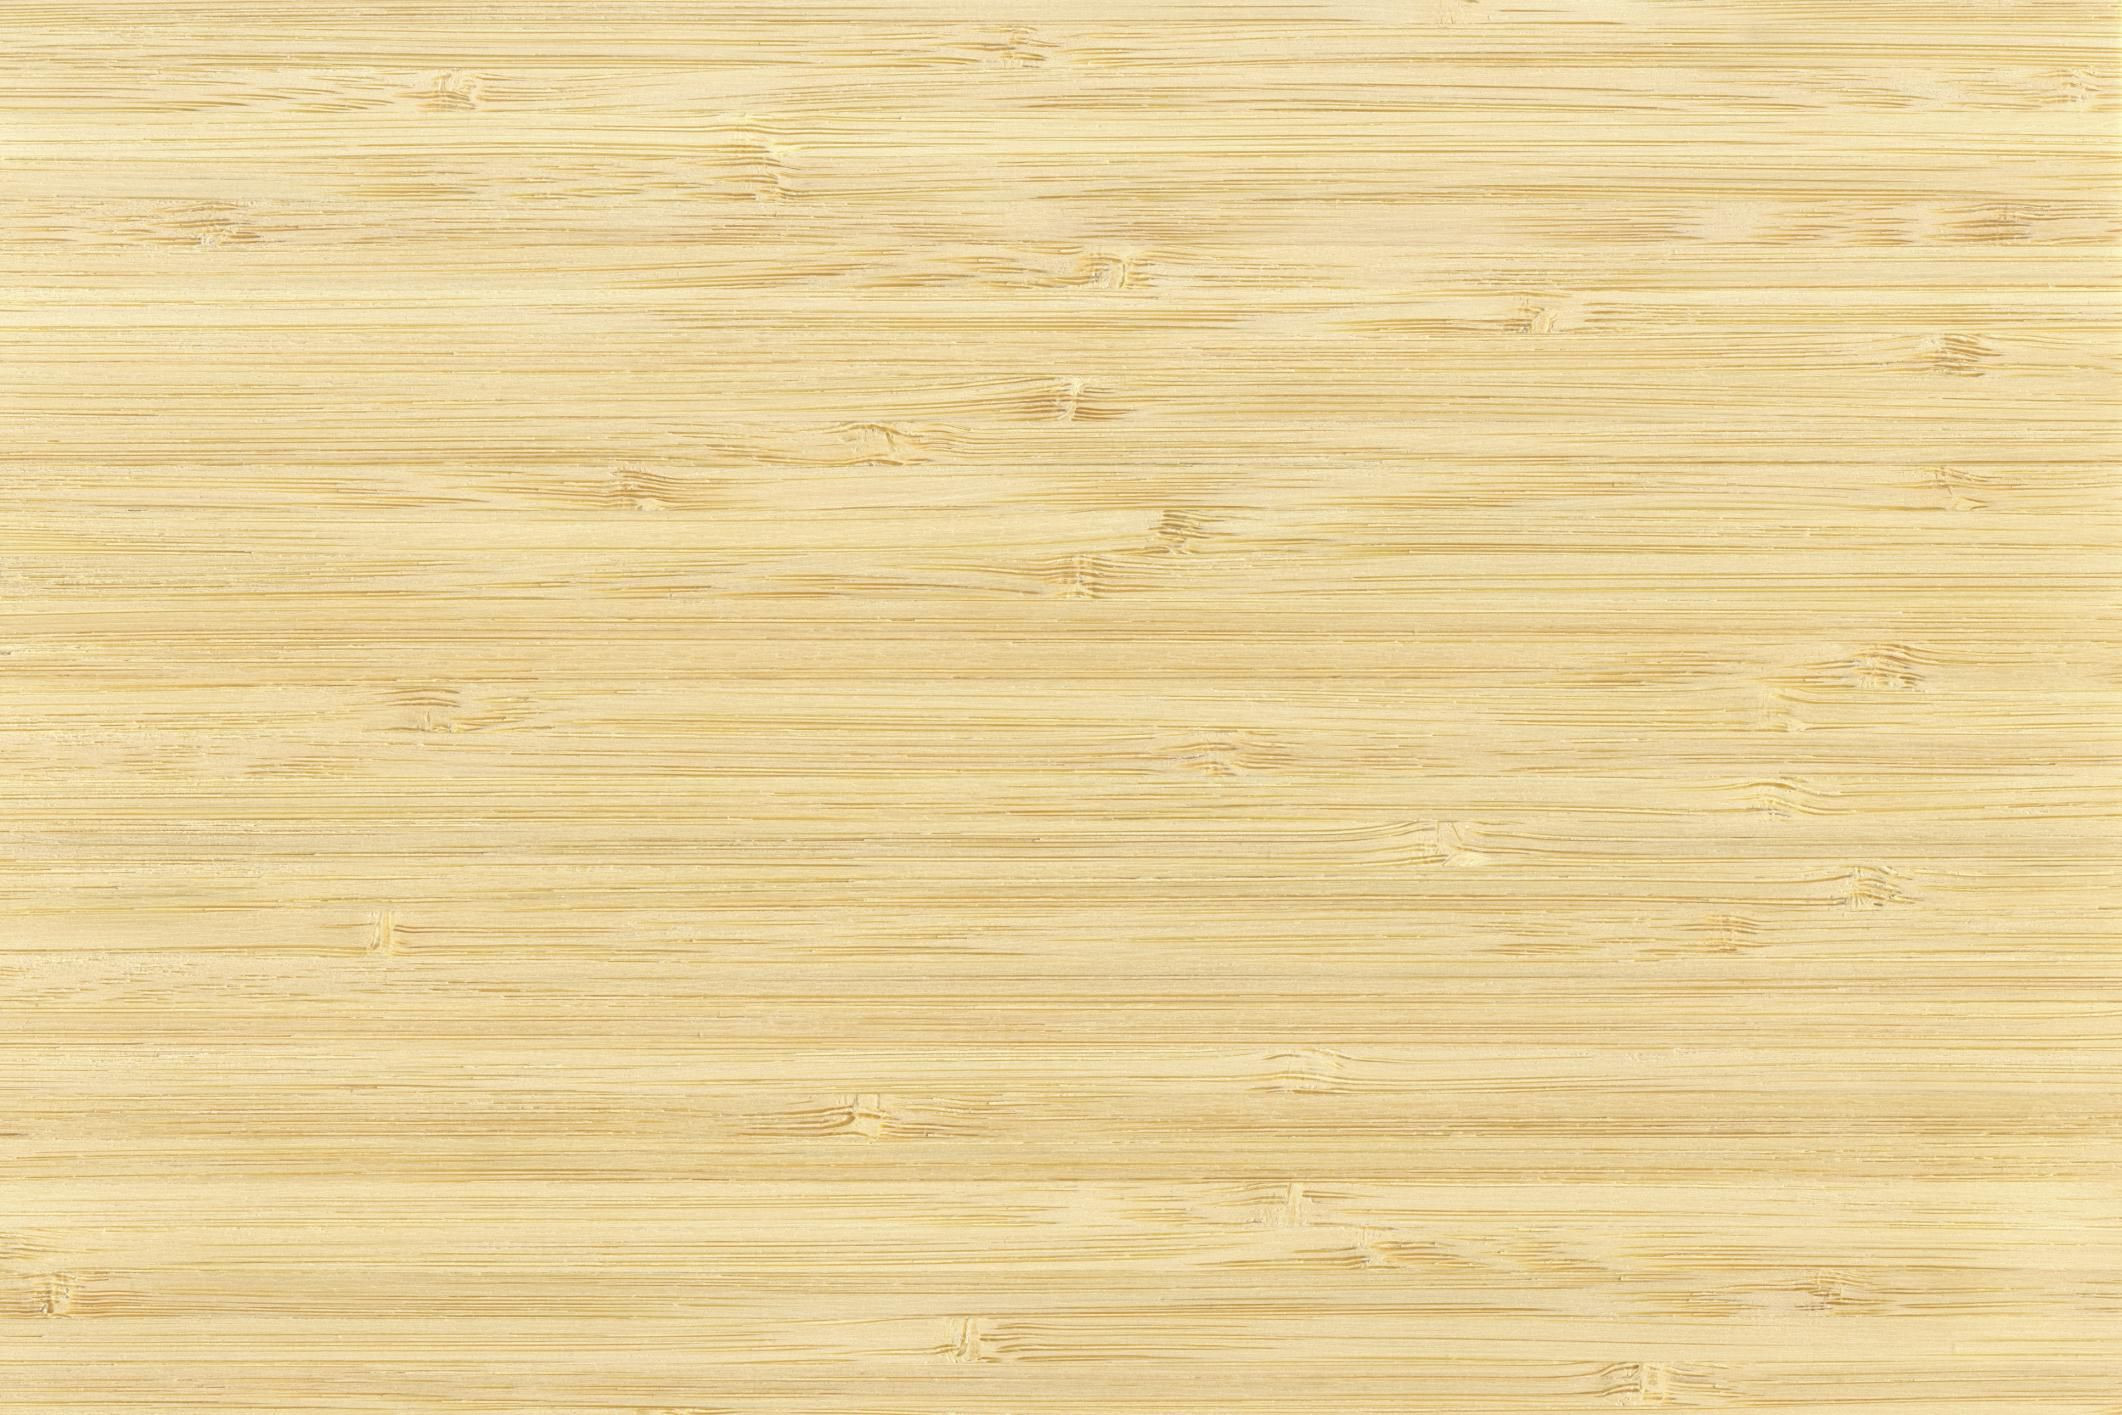 15 Ideal Hardwood Floor Refinishing Fargo Nd 2024 free download hardwood floor refinishing fargo nd of bamboo flooring in a bathroom things to consider in 182740579 56a2fd883df78cf7727b6d14